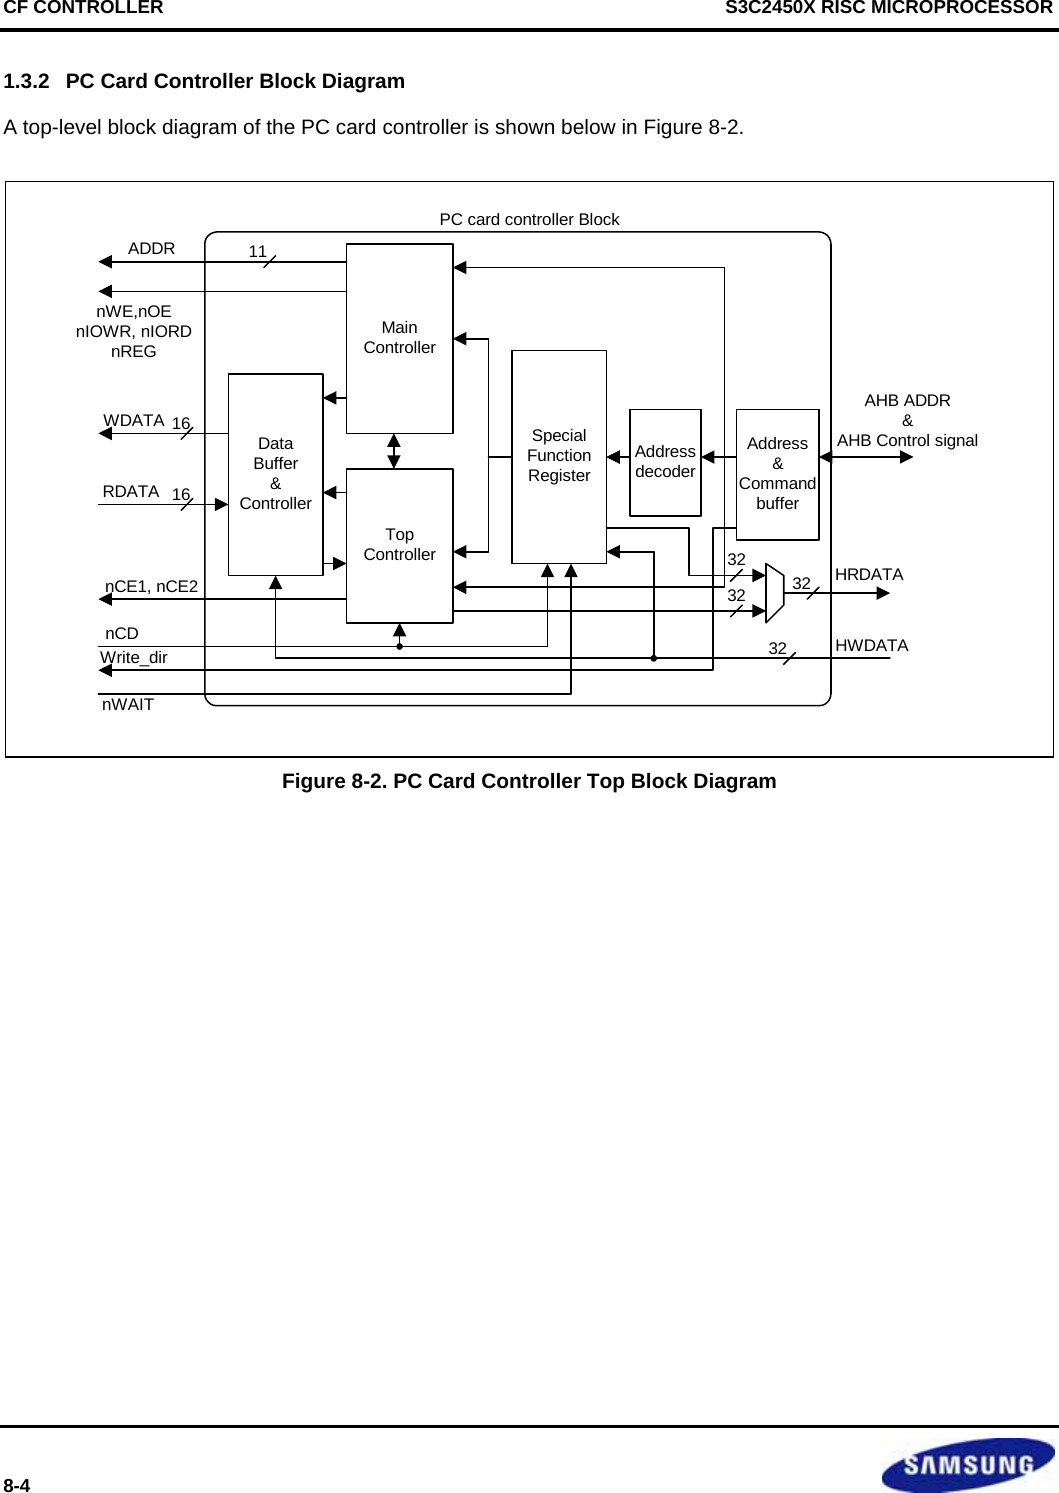 CF CONTROLLER     S3C2450X RISC MICROPROCESSOR 8-4   1.3.2  PC Card Controller Block Diagram A top-level block diagram of the PC card controller is shown below in Figure 8-2.  PC card controller BlockHRDATAHWDATAADDRnWE,nOEnIOWR, nIORDnREGWDATA1116nCE1, nCE2nWAITnCDWrite_dir3232RDATAAHB ADDR&amp;AHB Control signalMainControllerDataBuffer&amp;Controller16TopControllerSpecialFunctionRegisterAddressdecoderAddress&amp;Commandbuffer3232 Figure 8-2. PC Card Controller Top Block Diagram  